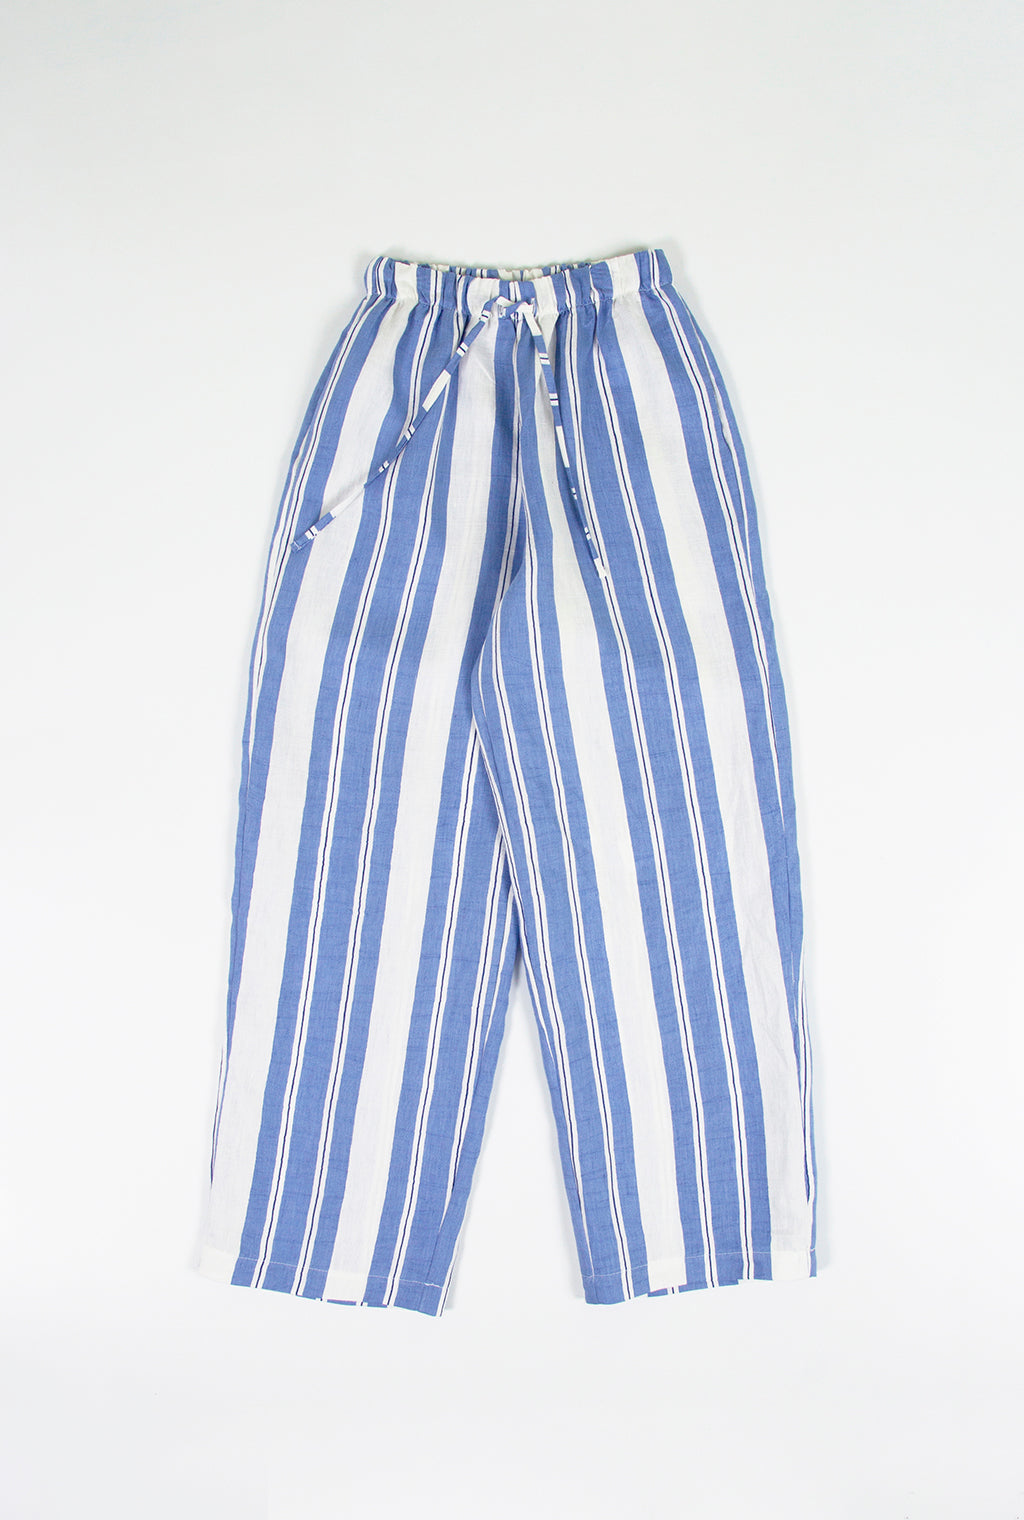 Sunday Girl Navy Blue Striped Pants | Fashion, Striped pants, Pants for  women